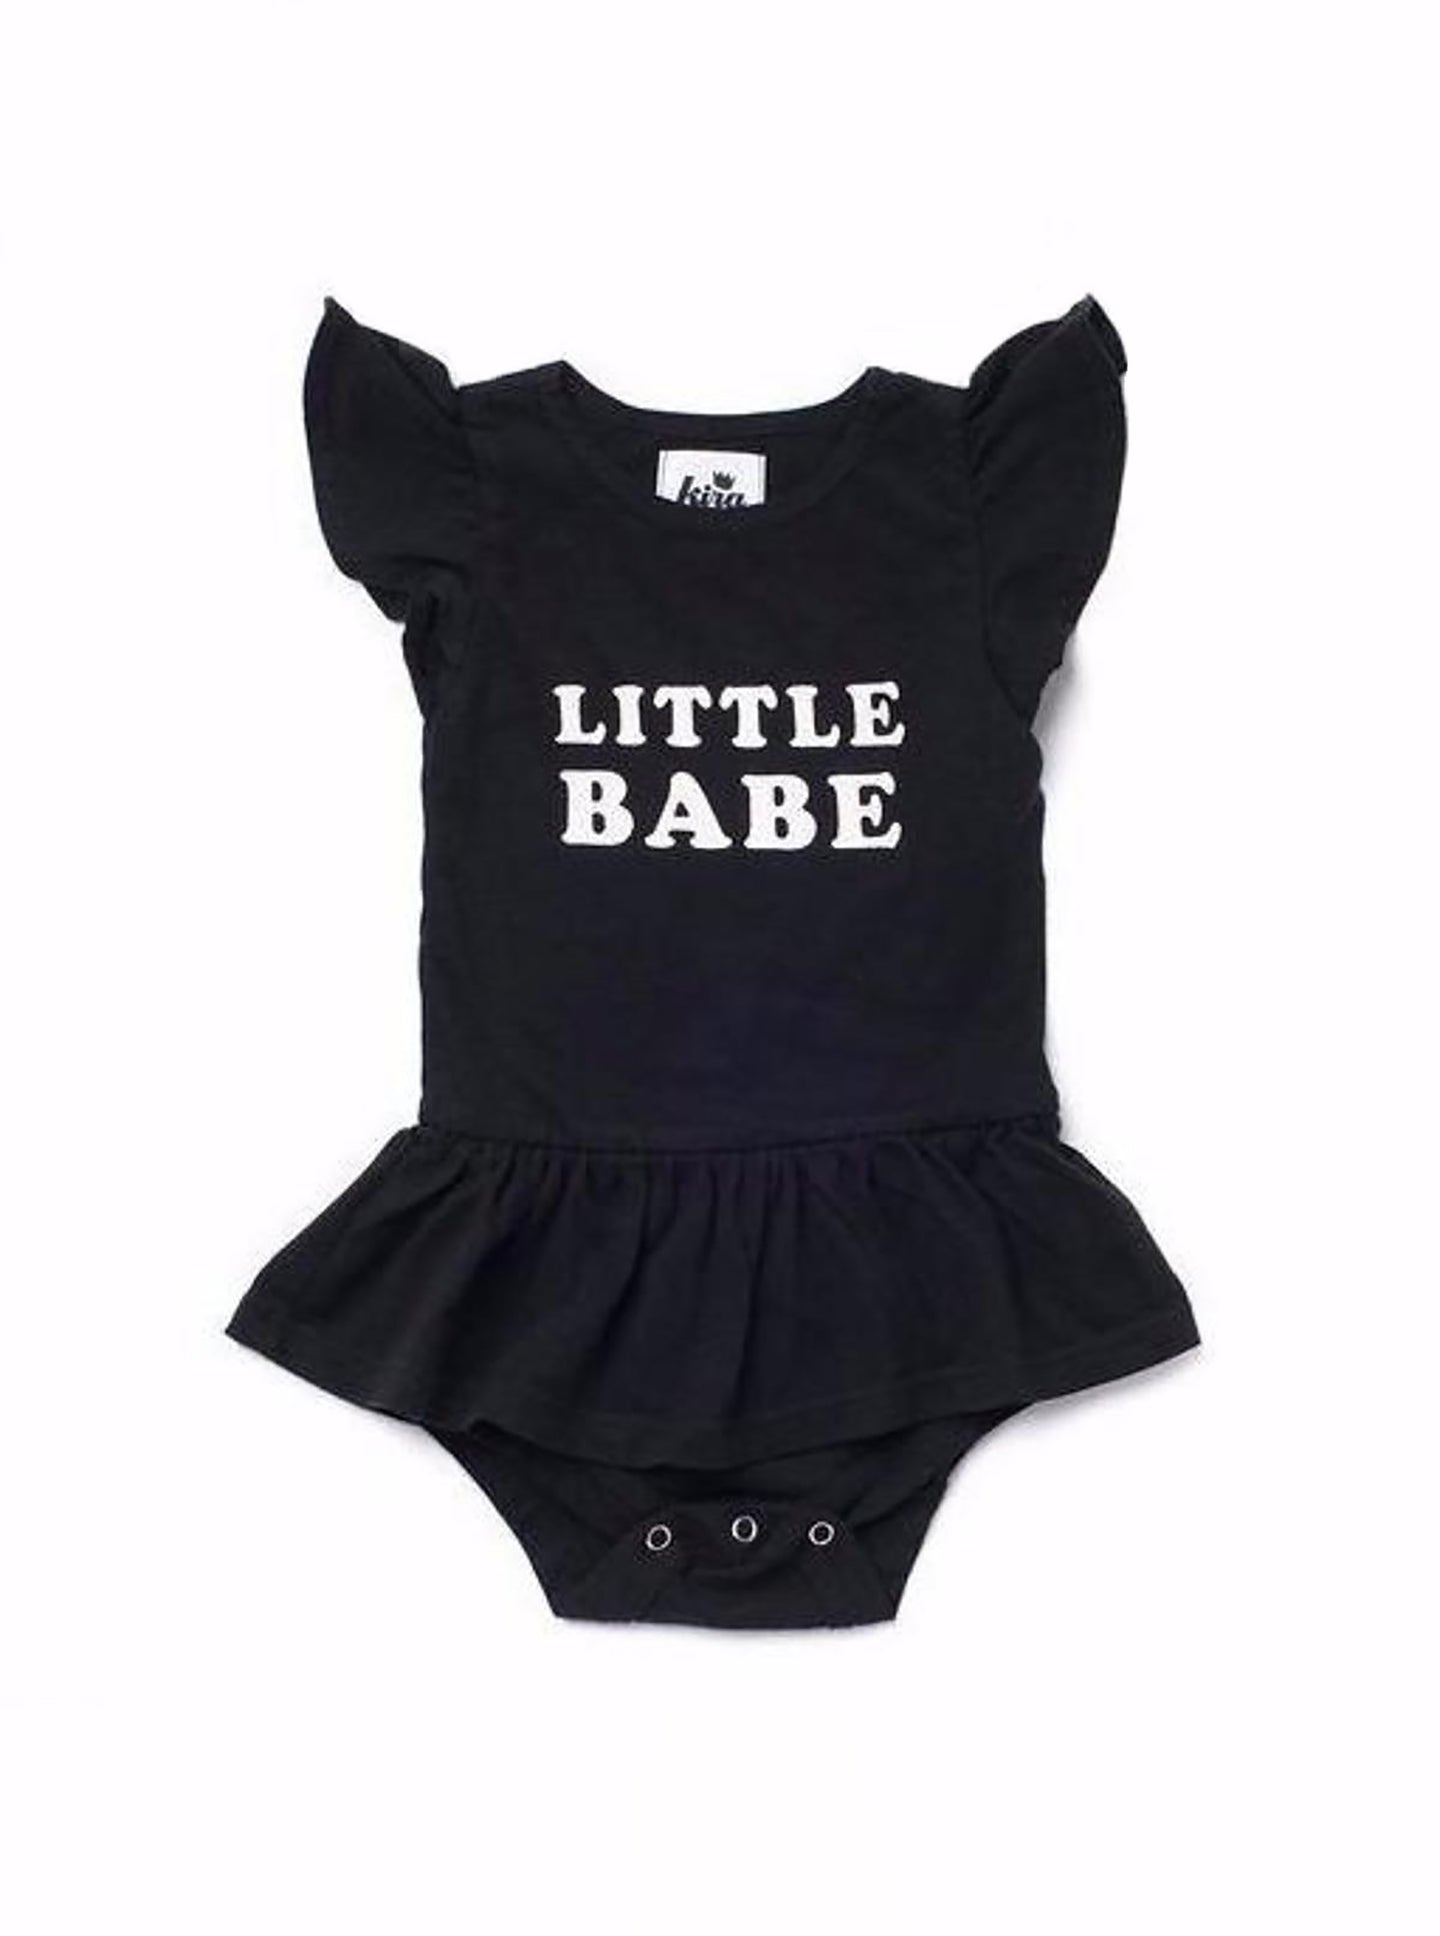 [18-24m] Kira Kids "Little Babe" Dress Onesie - Black BNWT